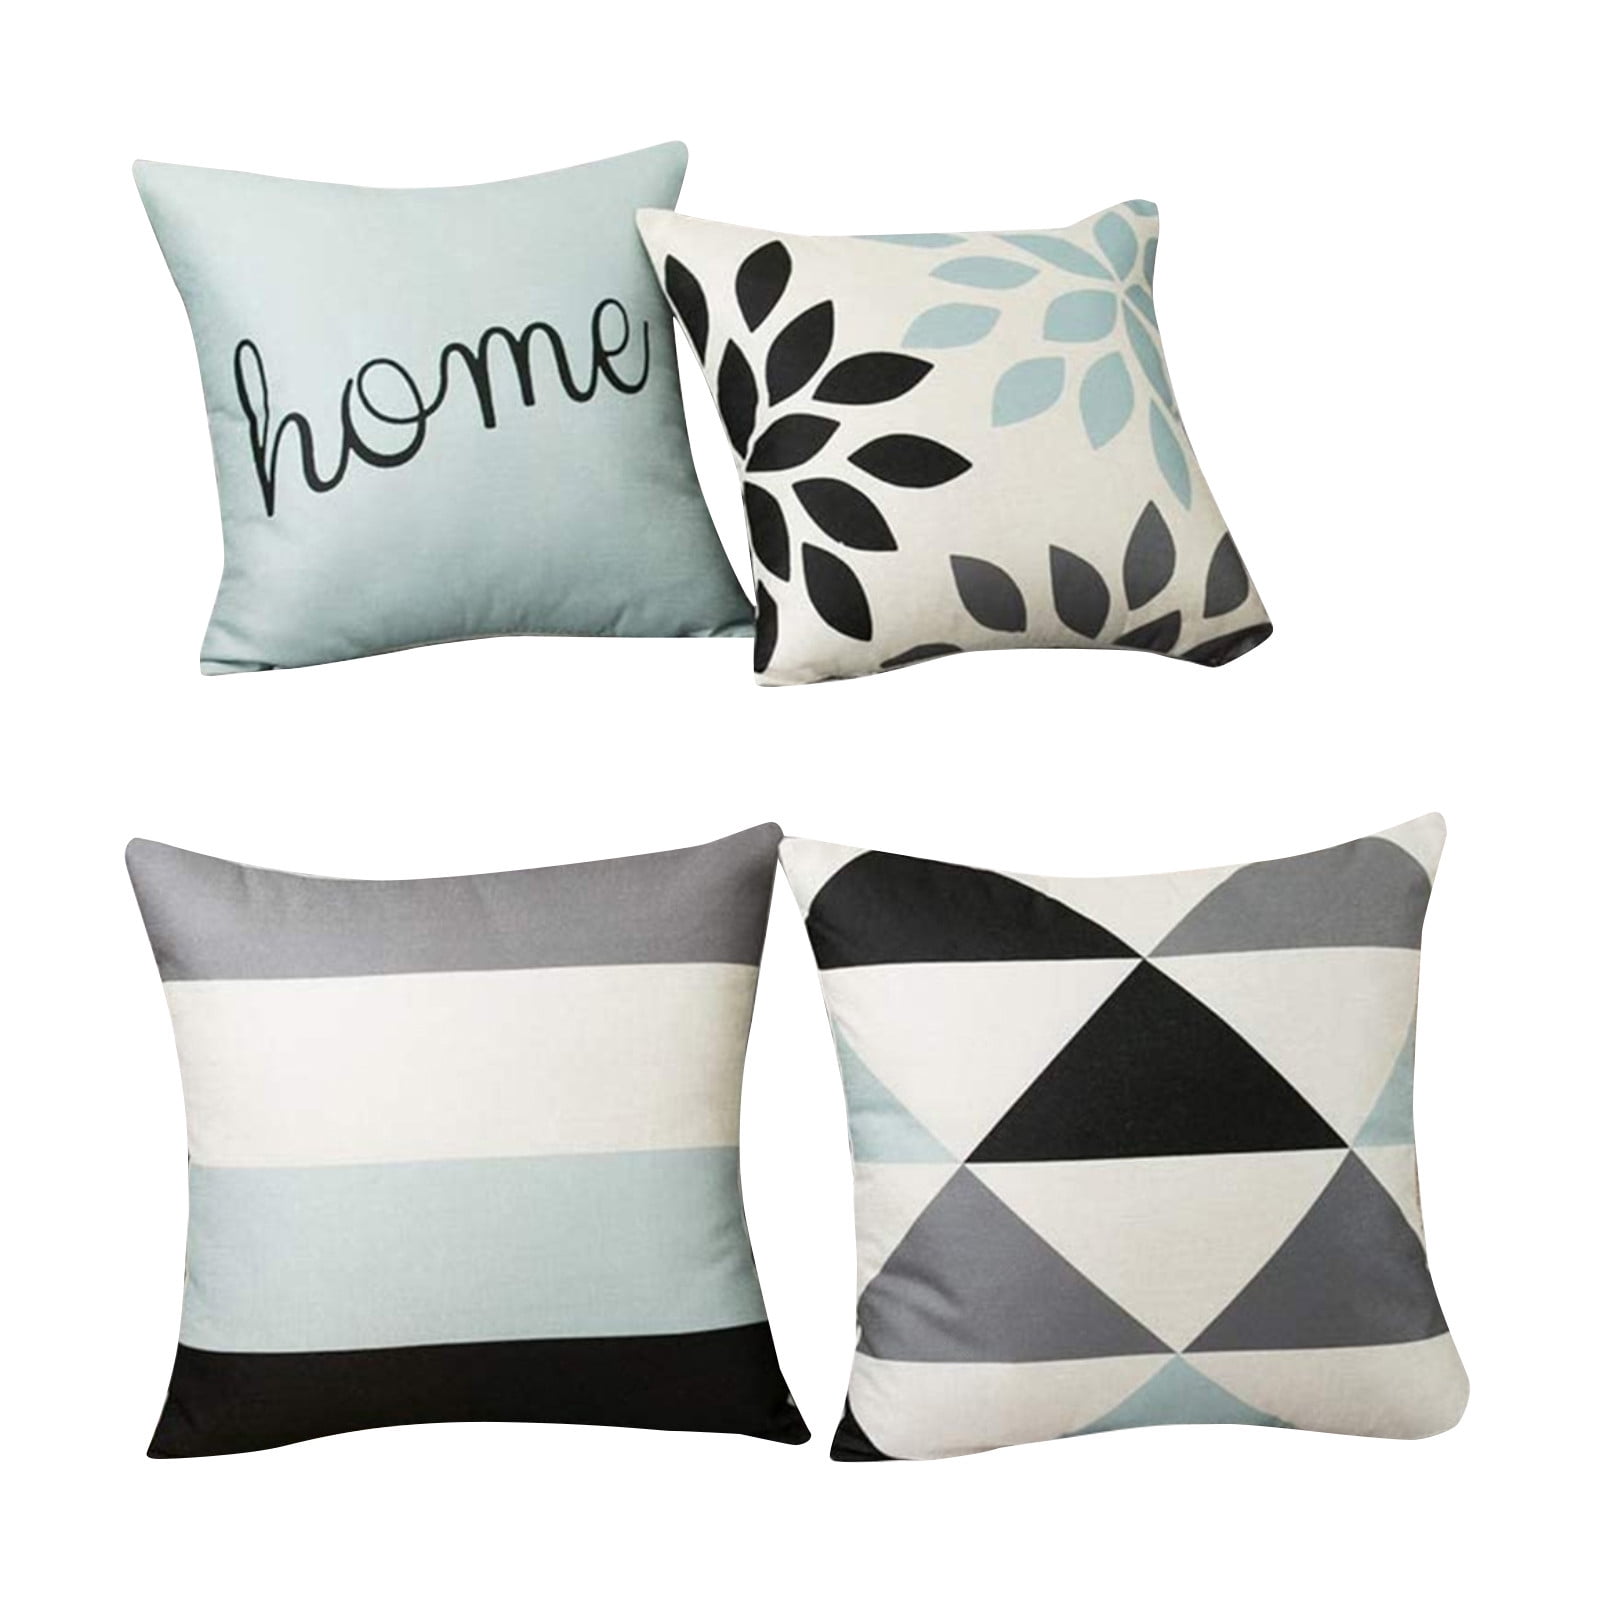 Standard Pillowcase for Home Decoration 18x18 Inch Geometric Art Novelty Modern Pillow Cover Soft Throw Pillow Case 